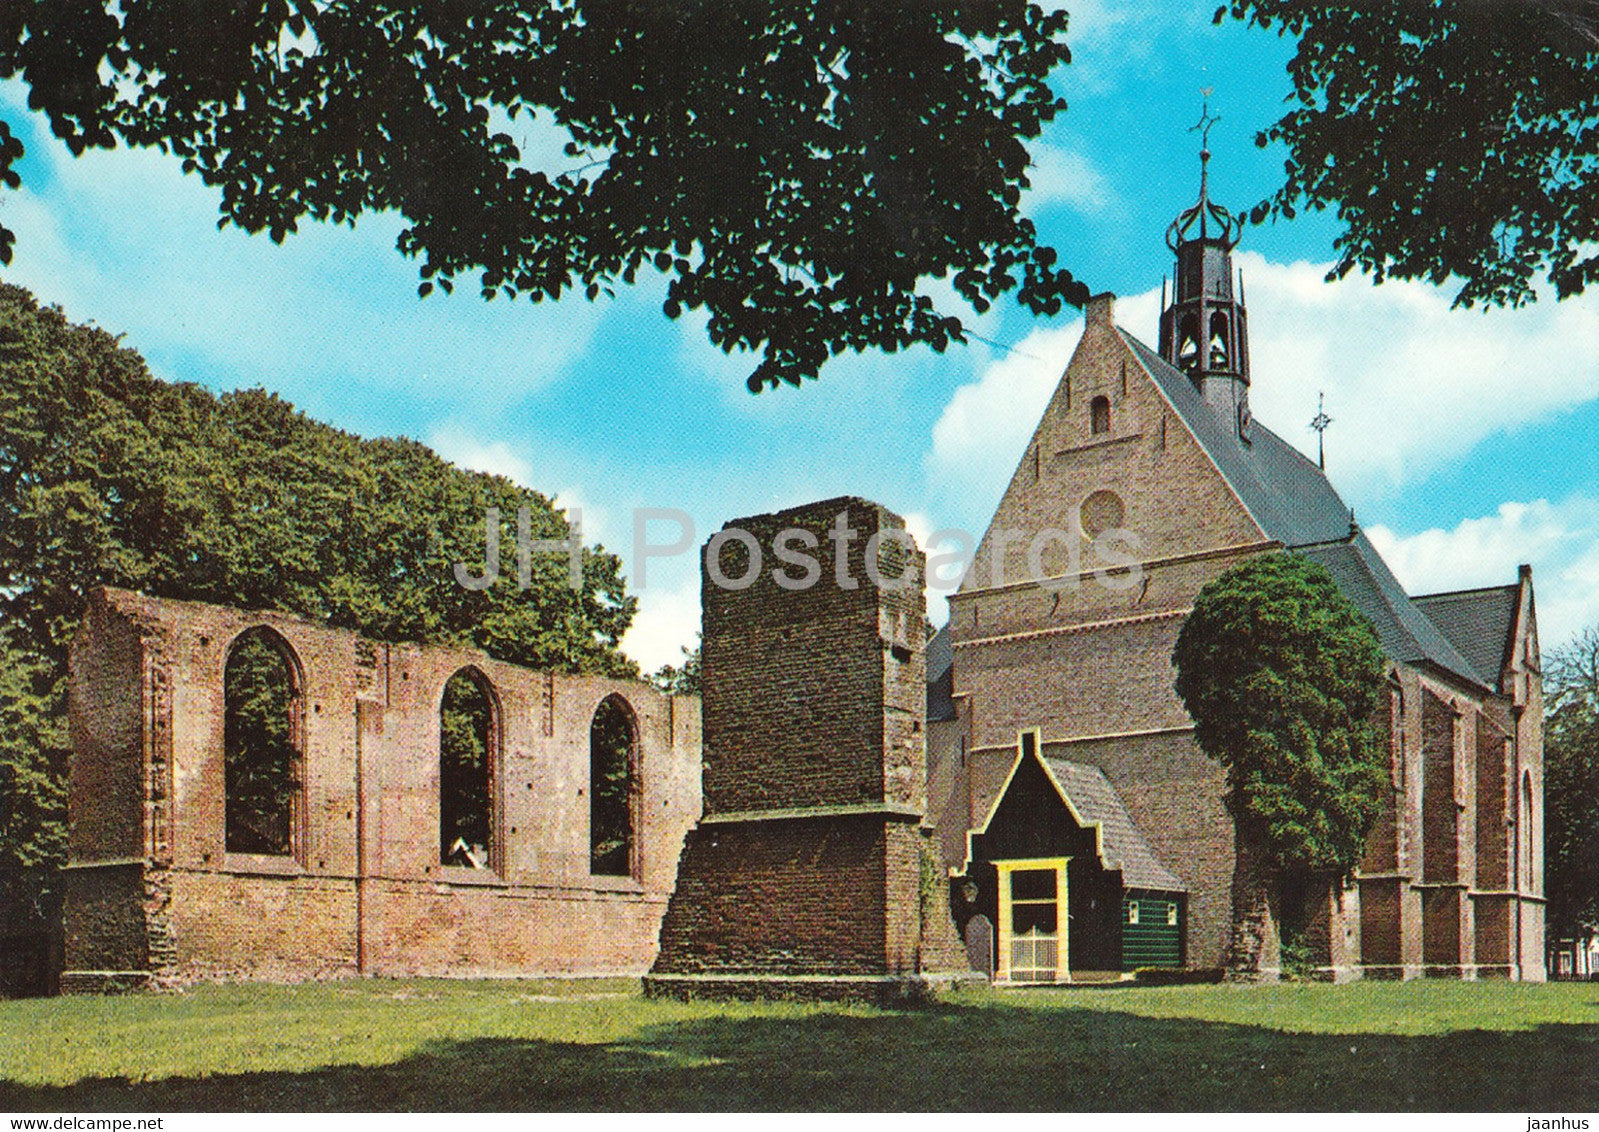 Bergen ruine - ruins - Netherlands - unused - JH Postcards